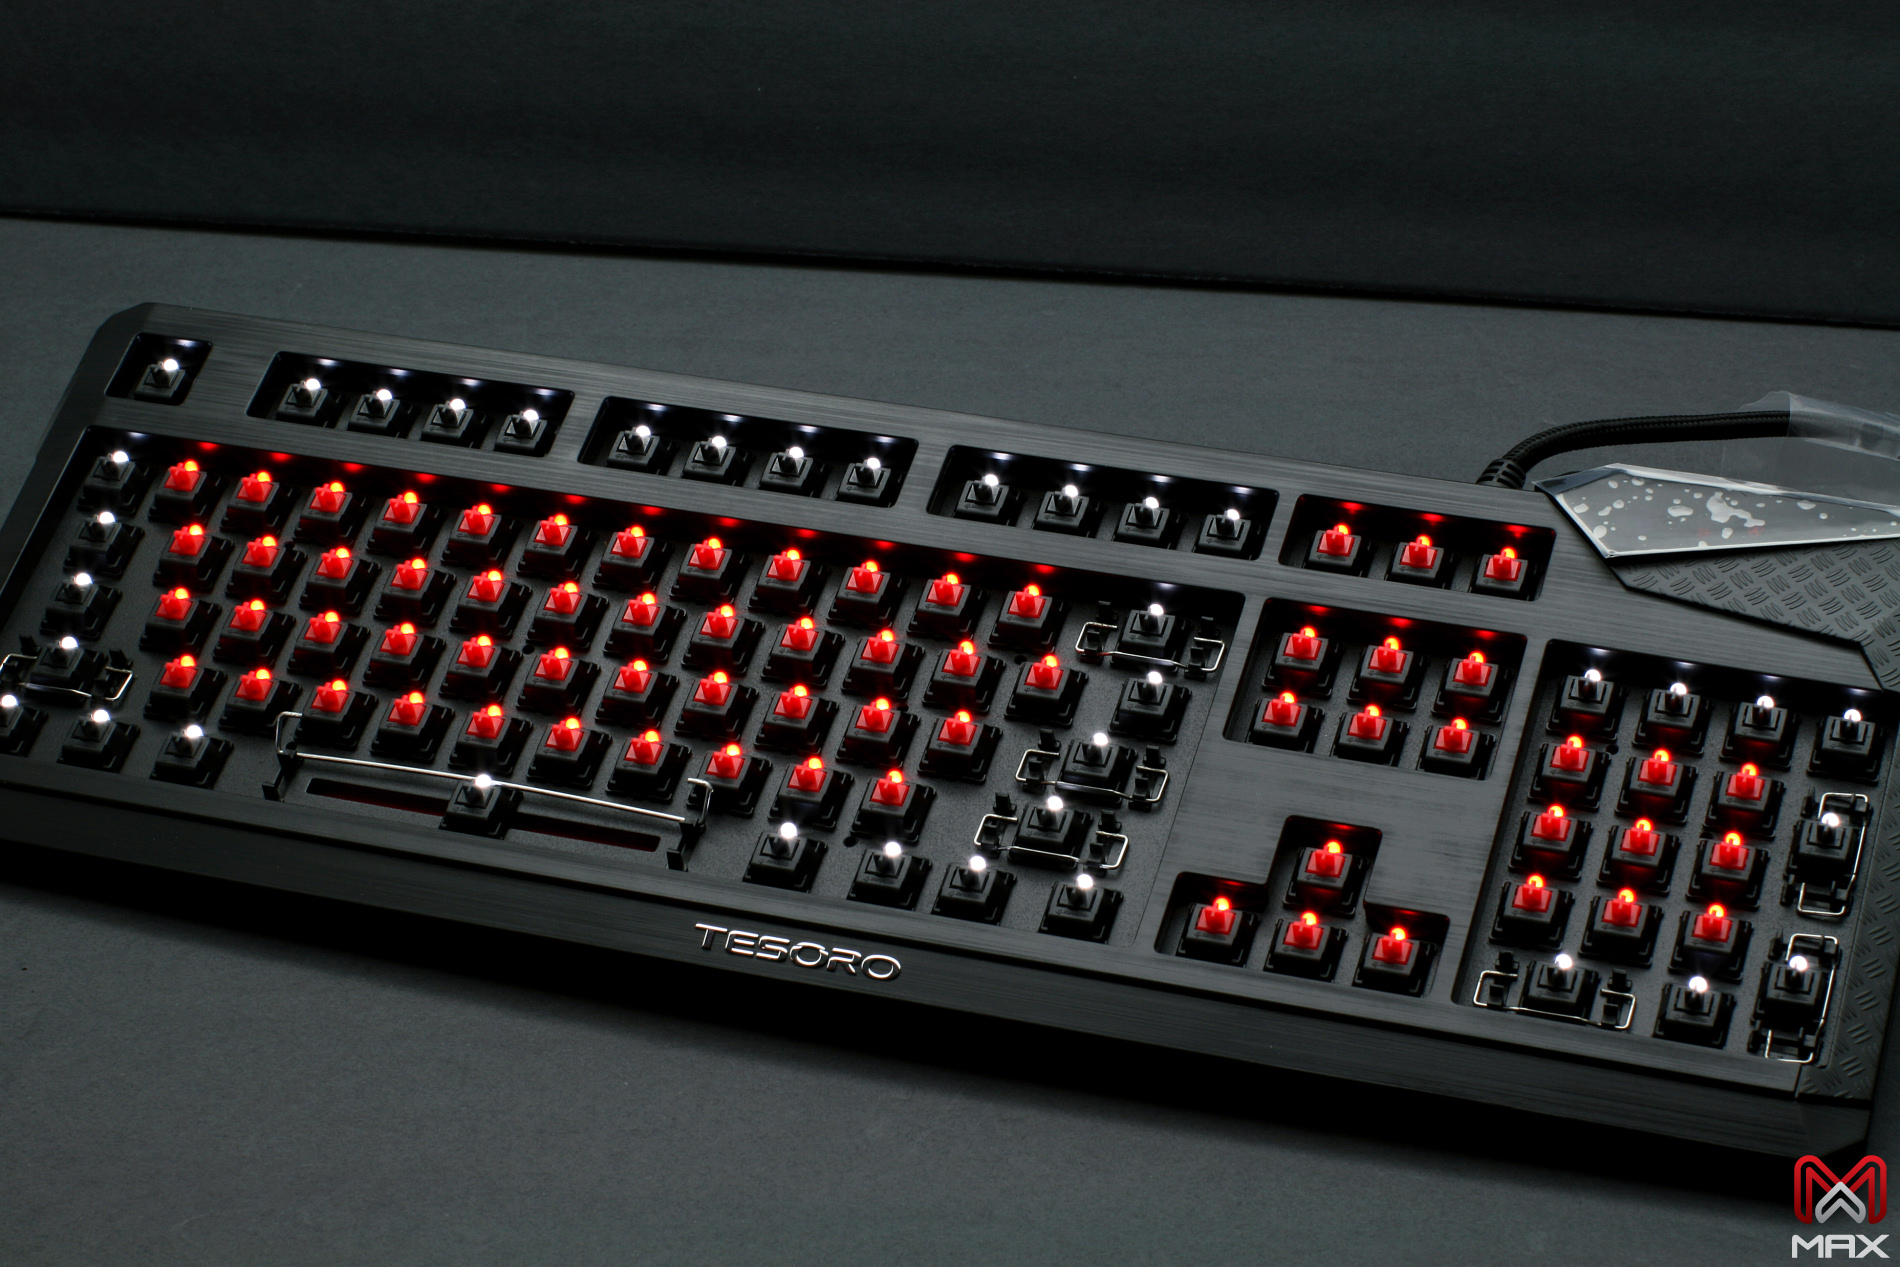 Max Keyboard Tesoro Durandal eSport Edition Backlit Mechanical Keyboard